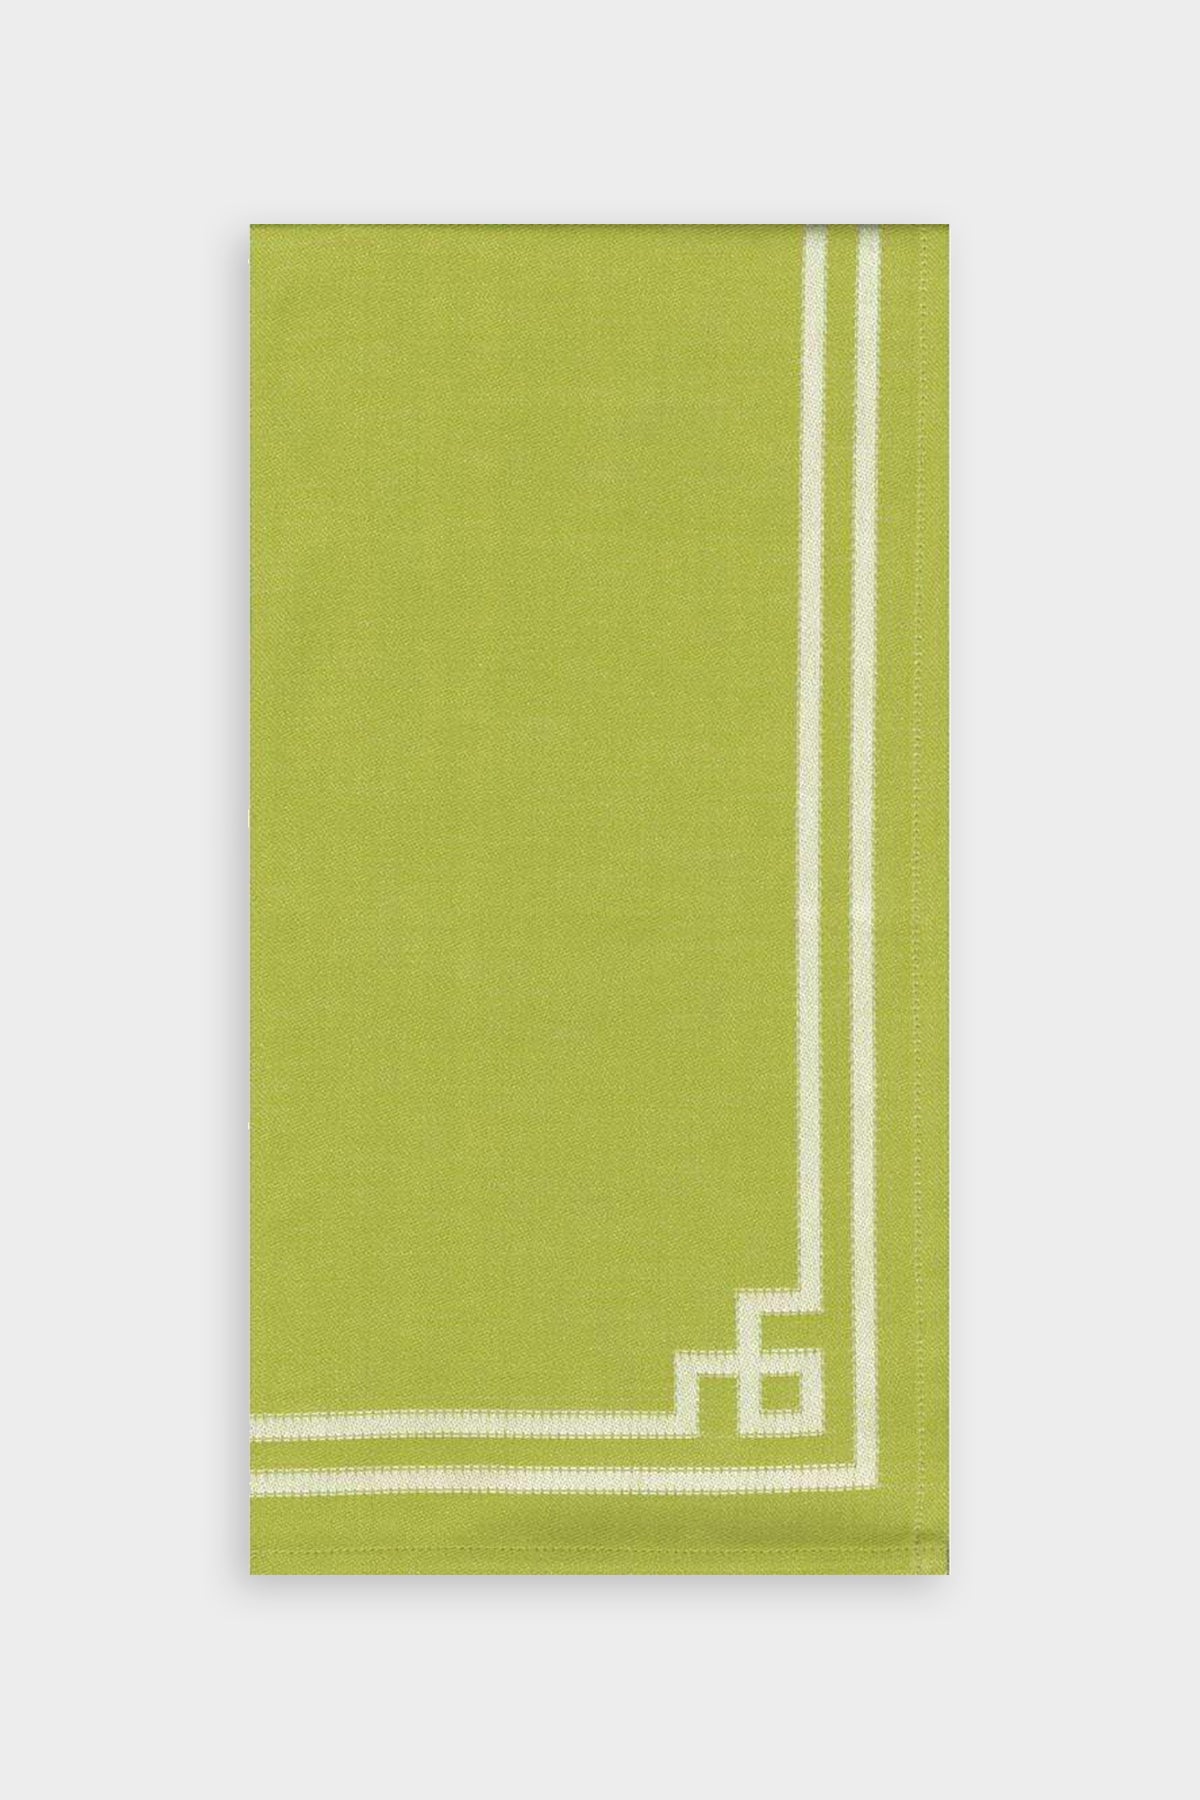 Rive Gauche Cotton Tea Towel in Spring Green - Each - shop-olivia.com